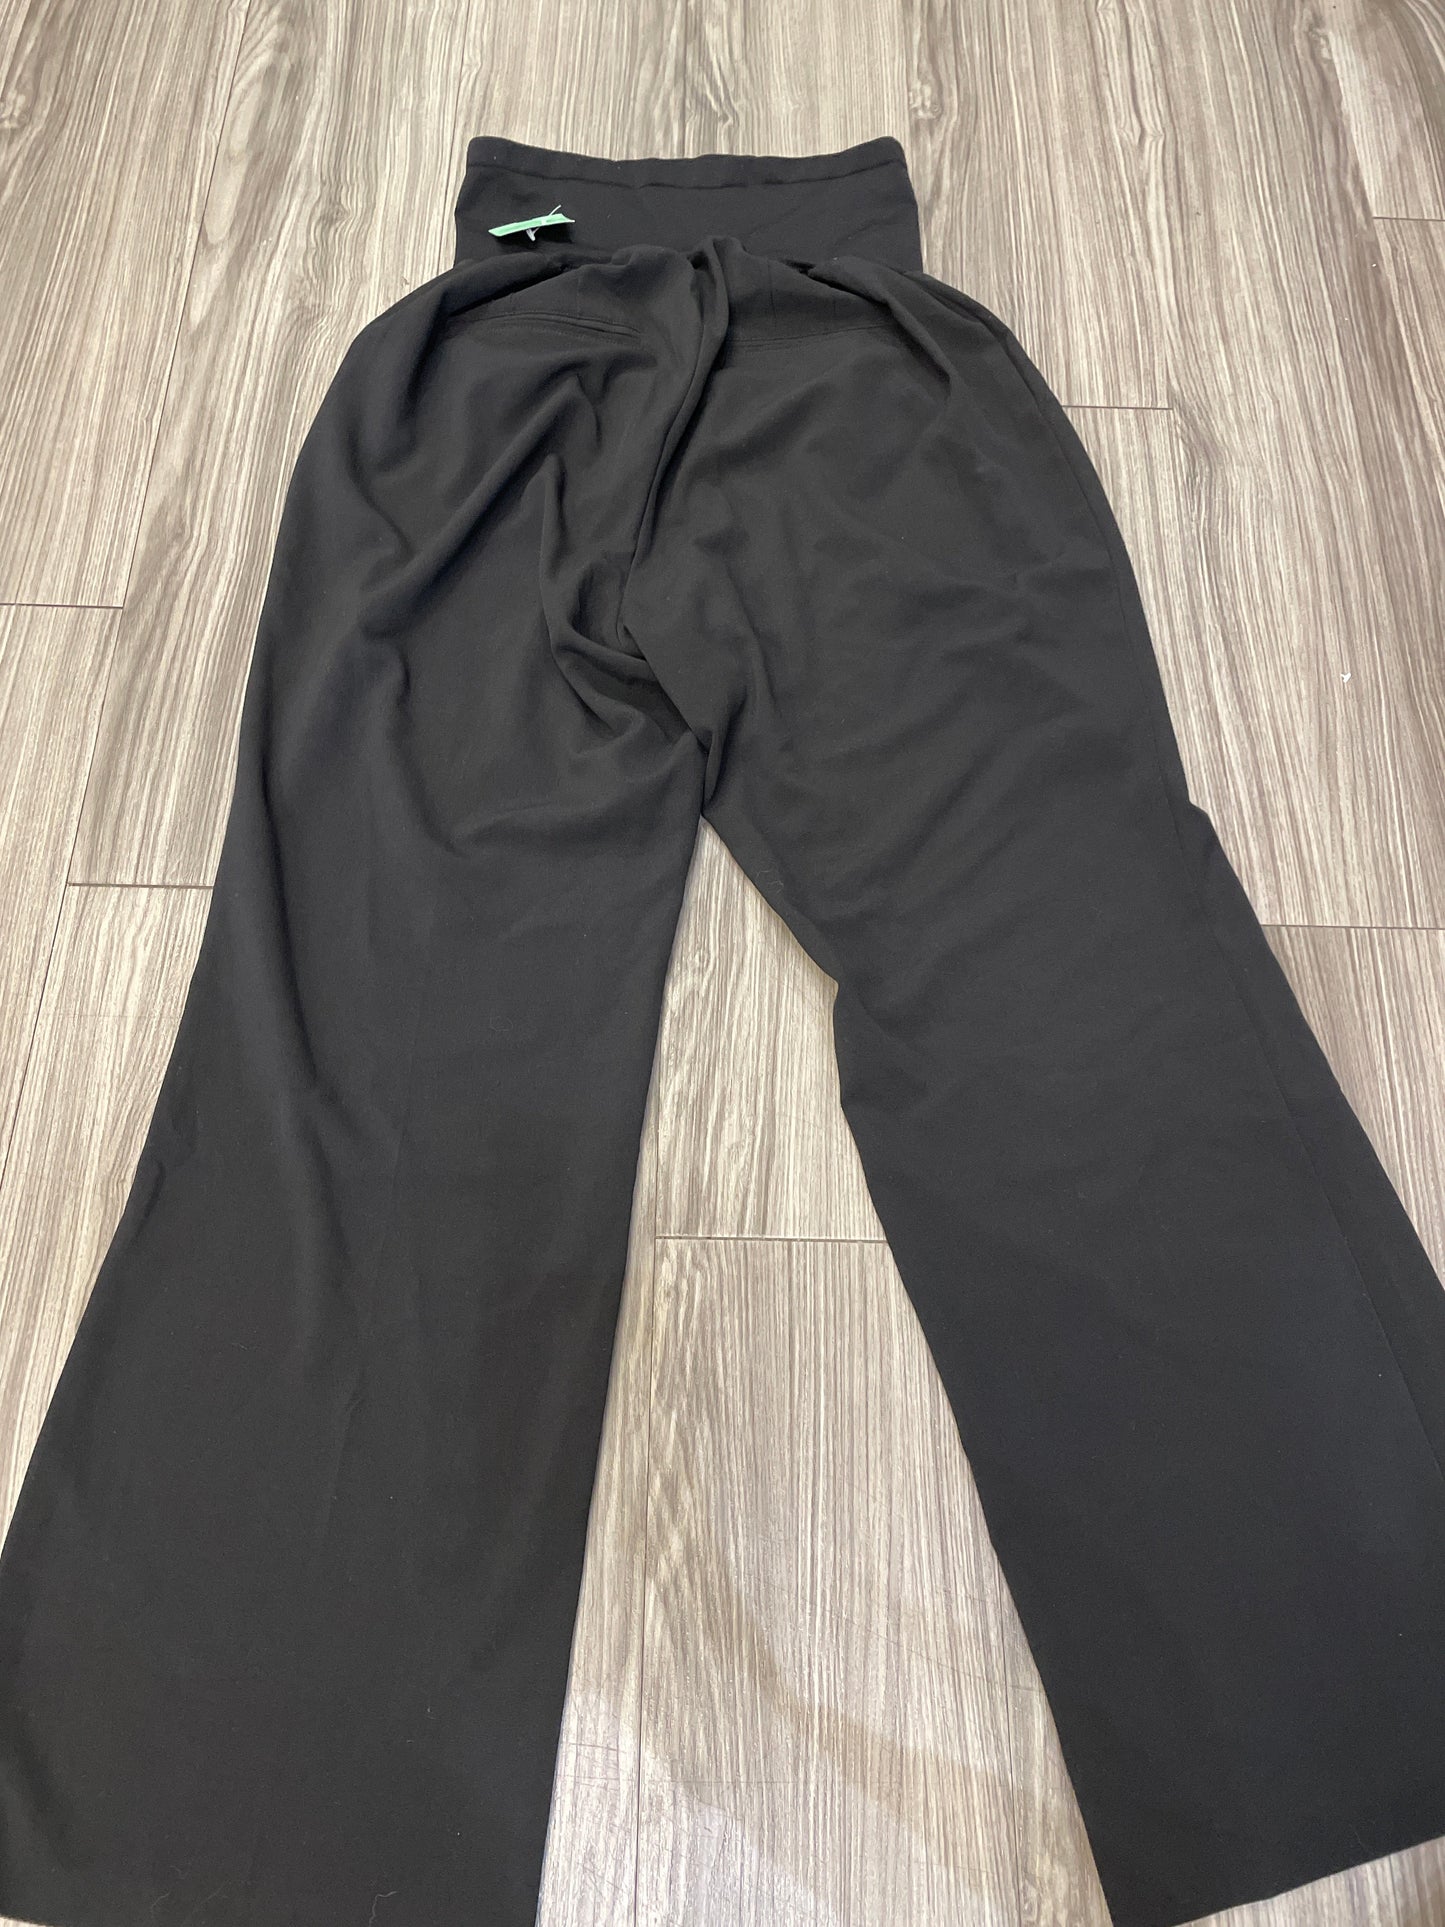 Black Pants Dress Oh Baby By Motherhood, Size 1x